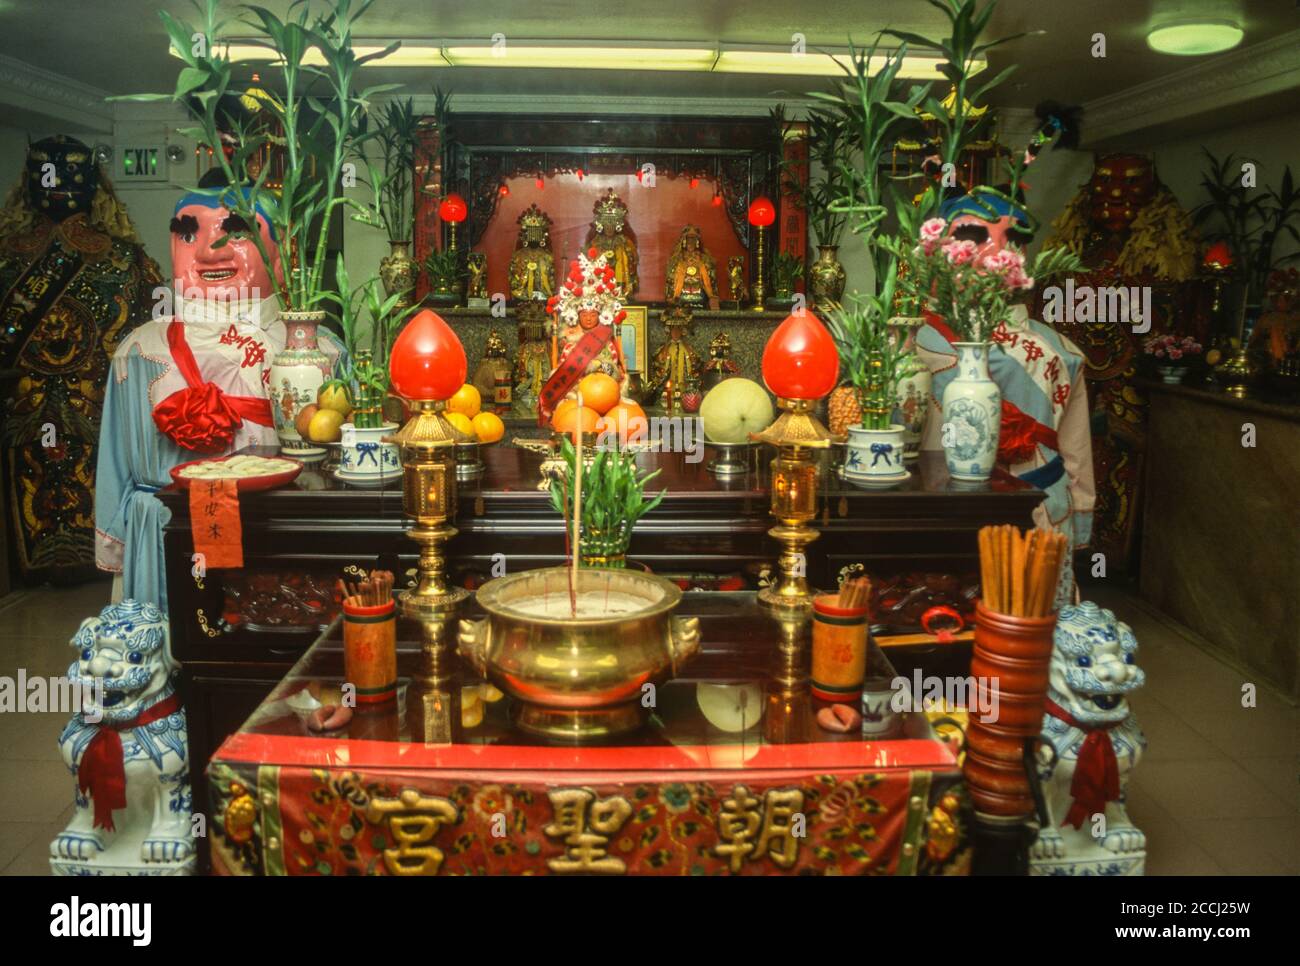 MA Tsu Tempel, ein taoistischer Tempel, Chinatown, San Francisco, Kalifornien, USA. Stockfoto